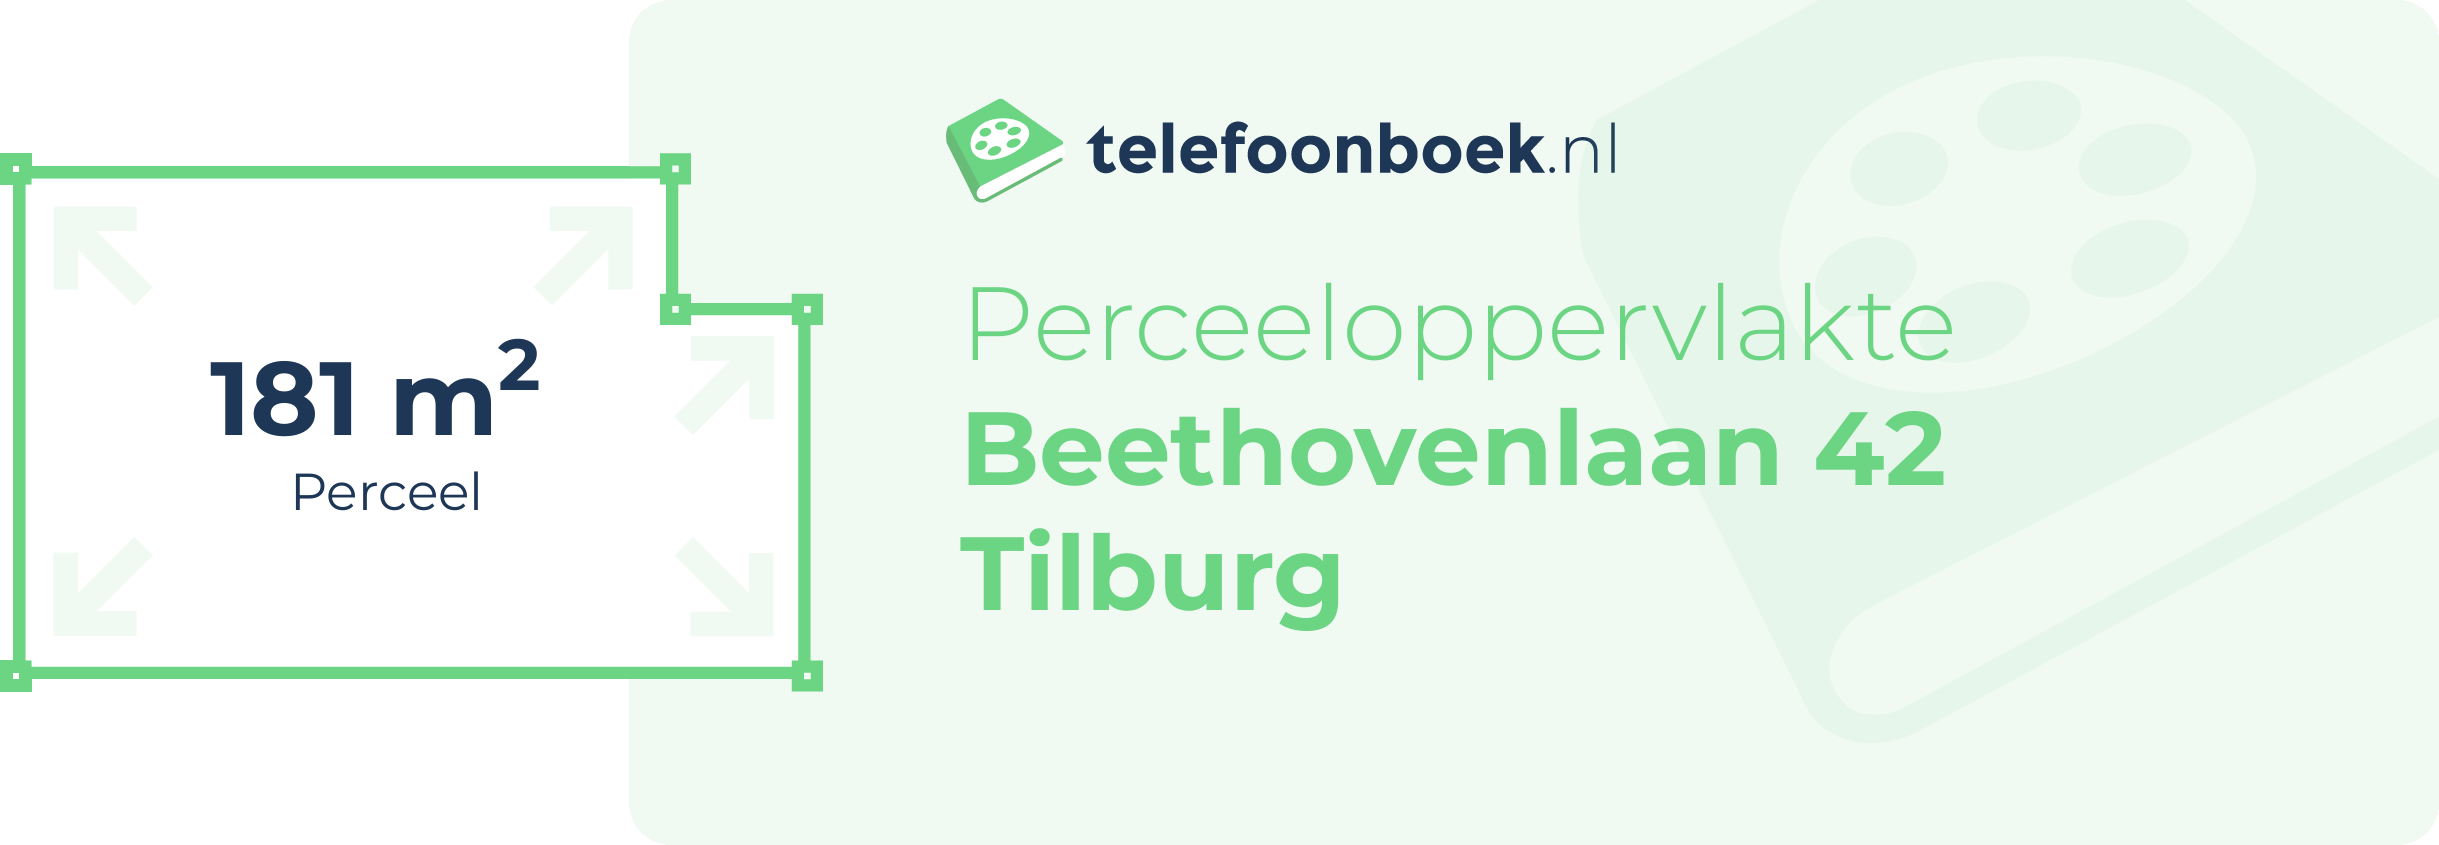 Perceeloppervlakte Beethovenlaan 42 Tilburg